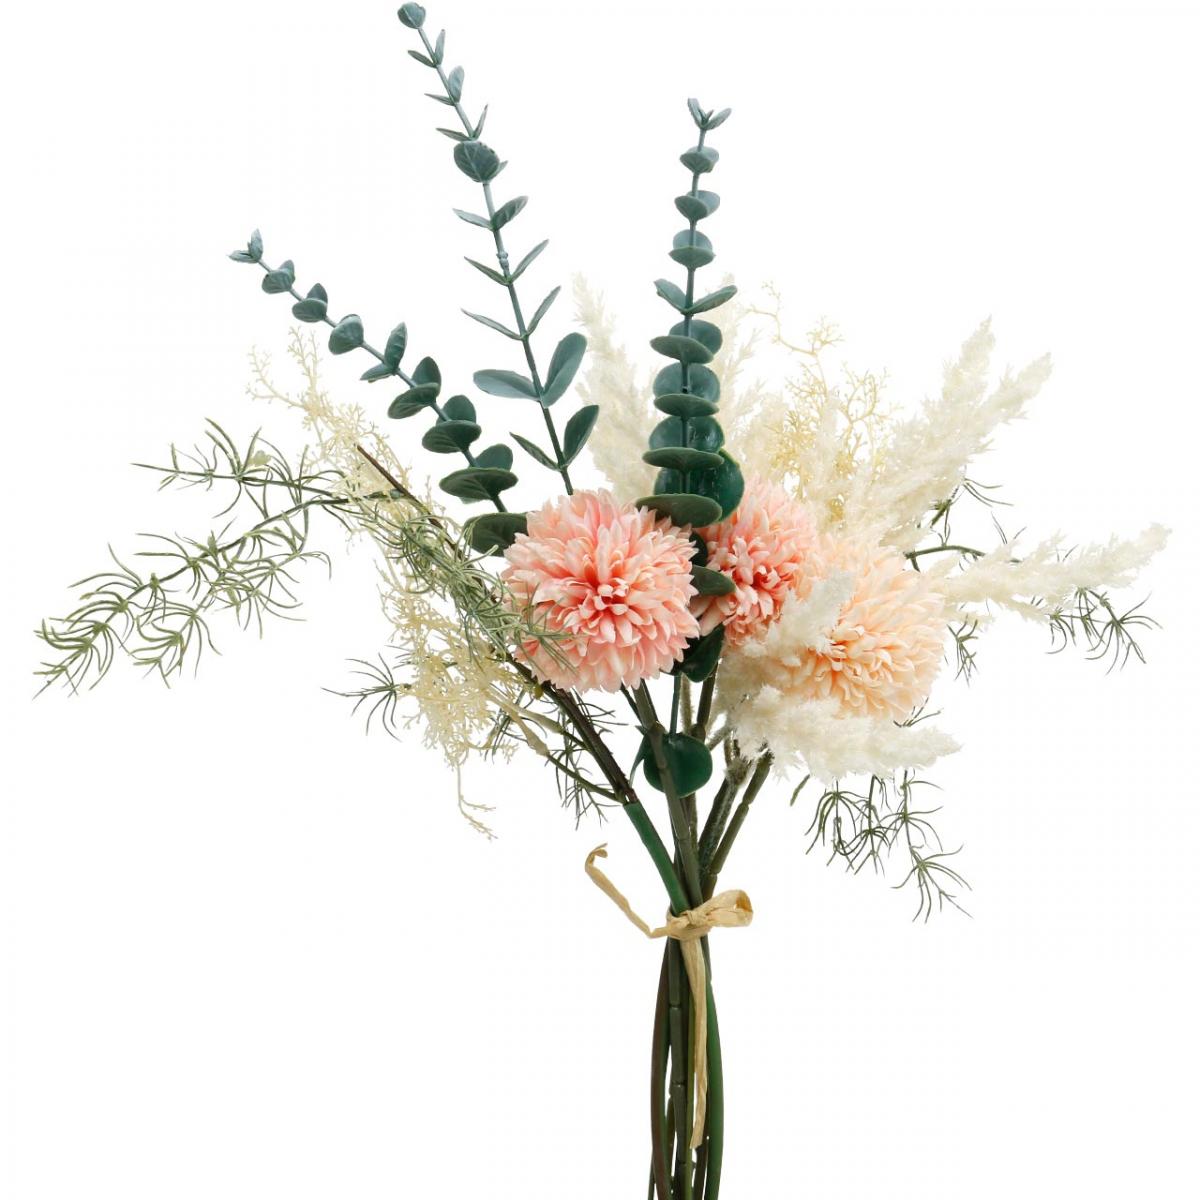 Arrangement seidenblumen arte comprarle flores flores artificiales decoración decorativas